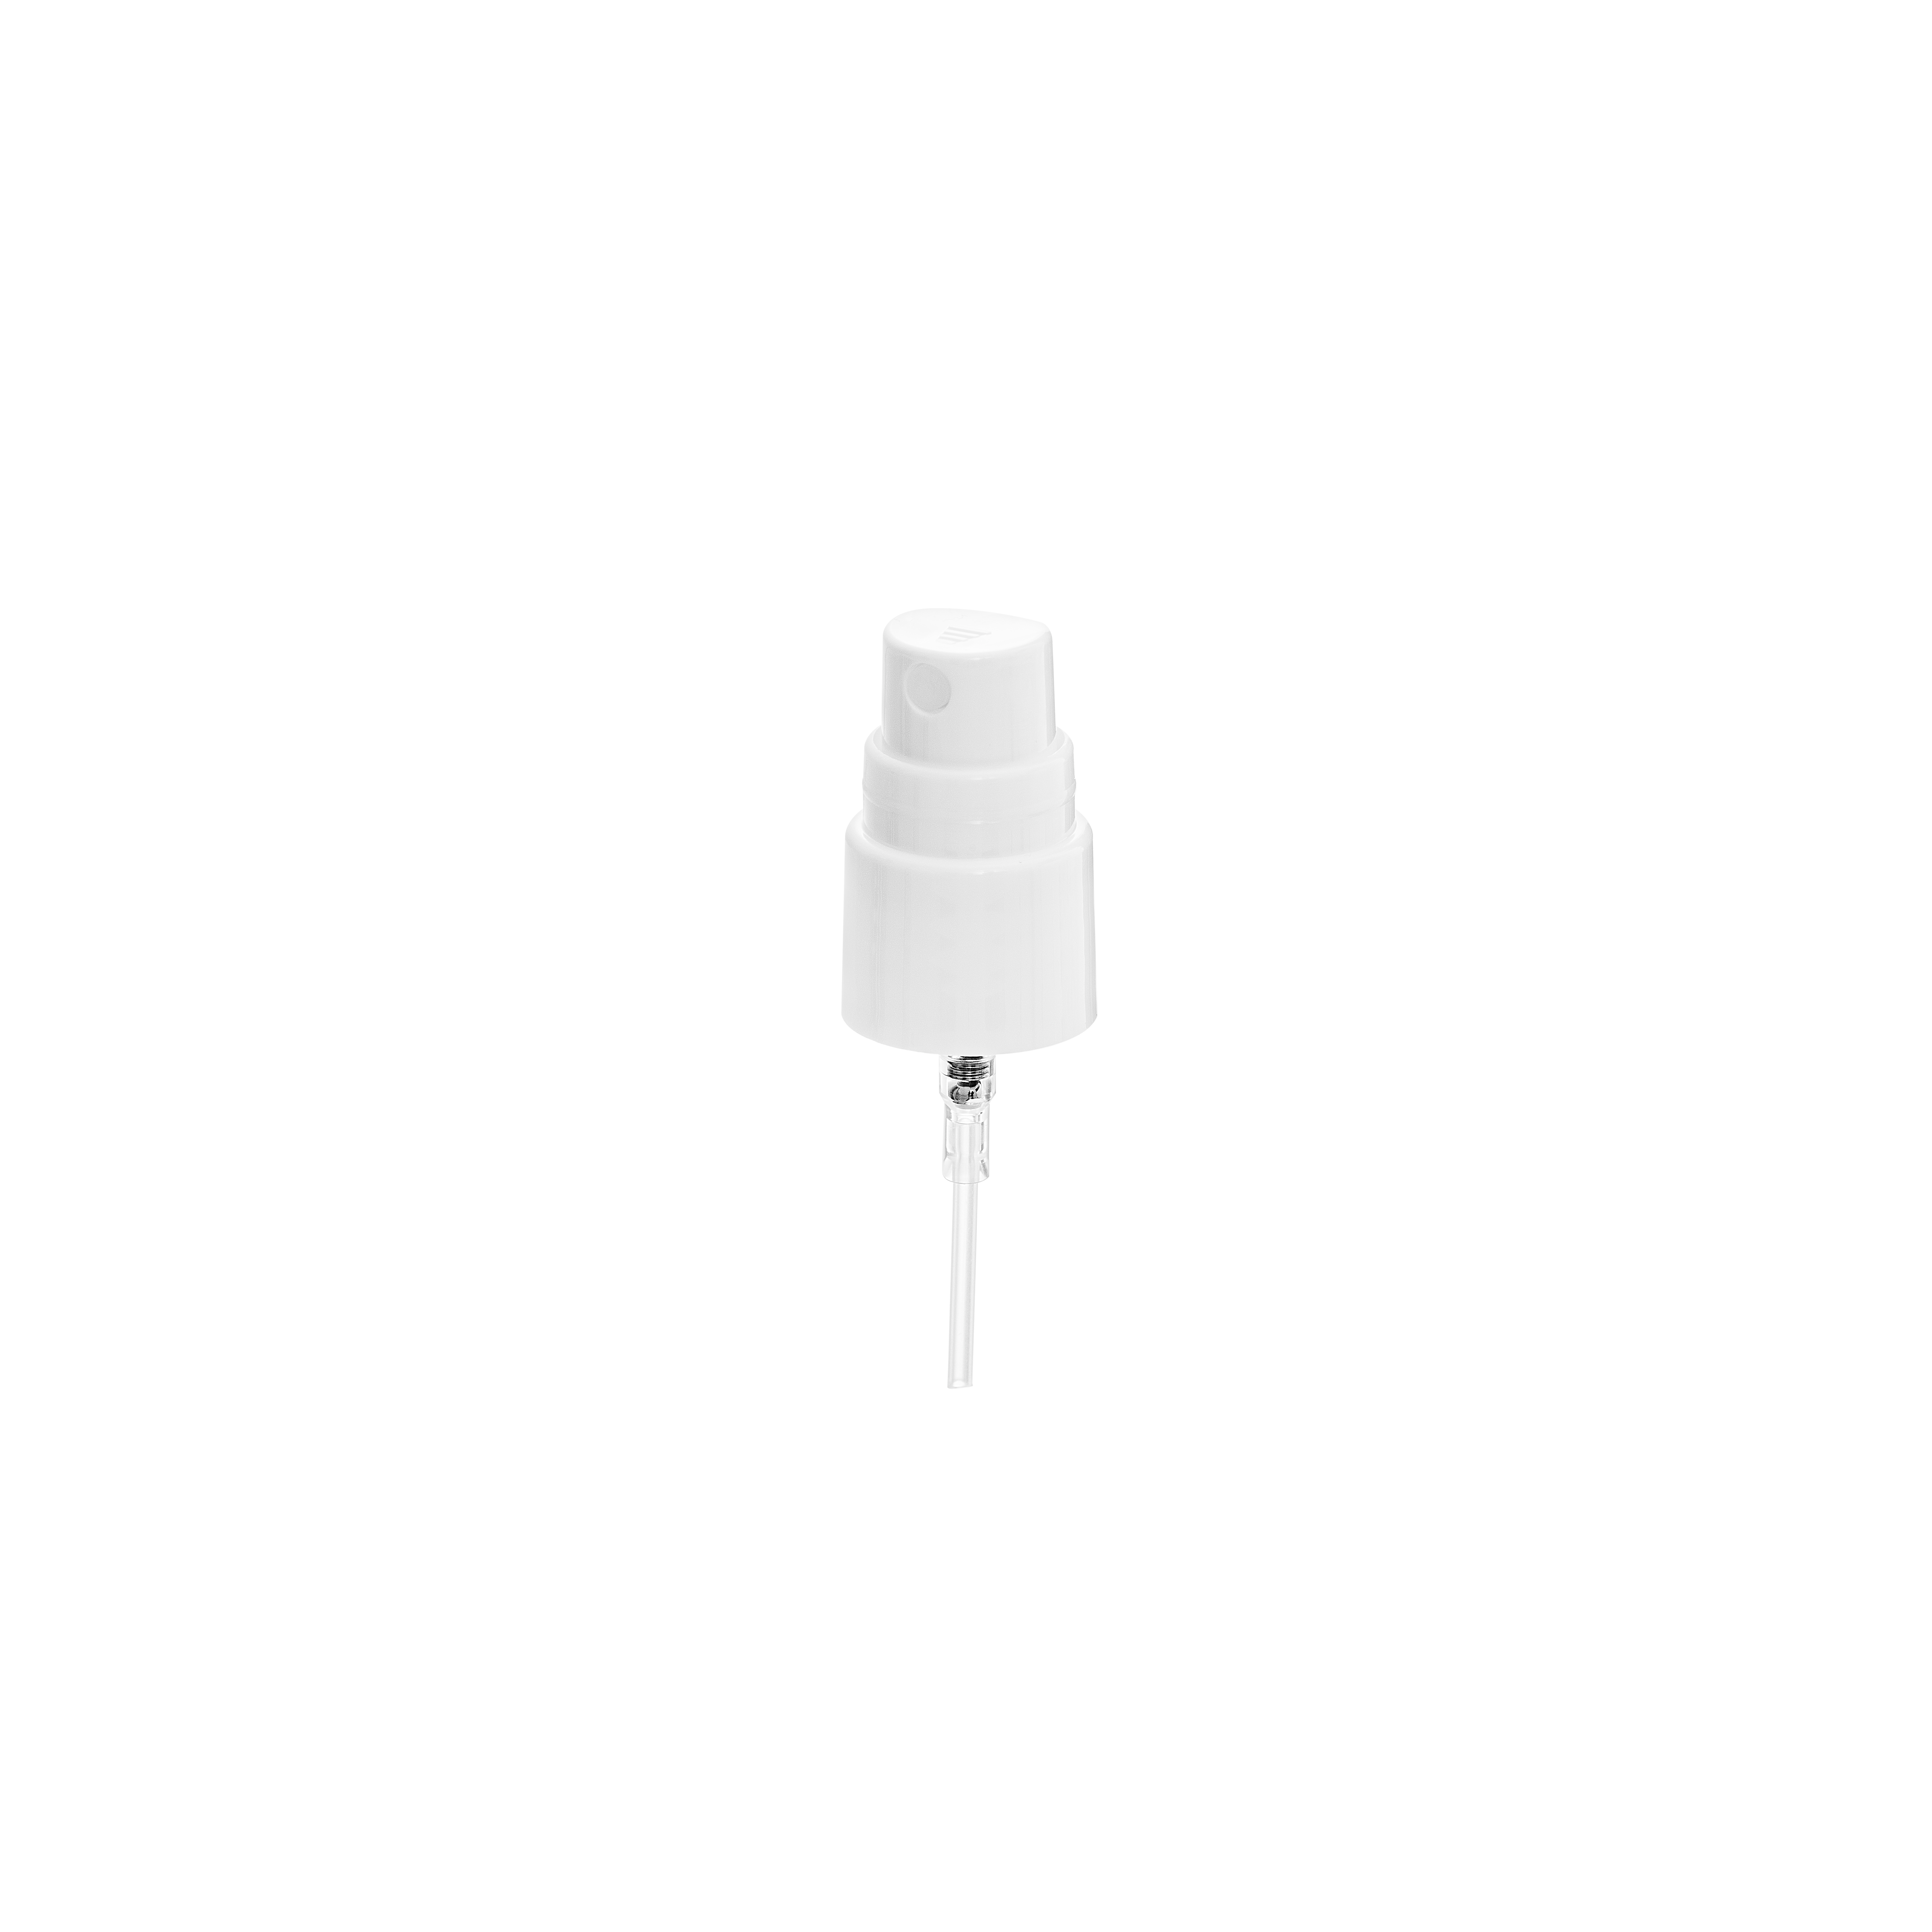 Mist sprayer Sinfonia, 24/410, PP, white, glossy finish, dose 0.19 ml, with white overcap for Linden 237 ml